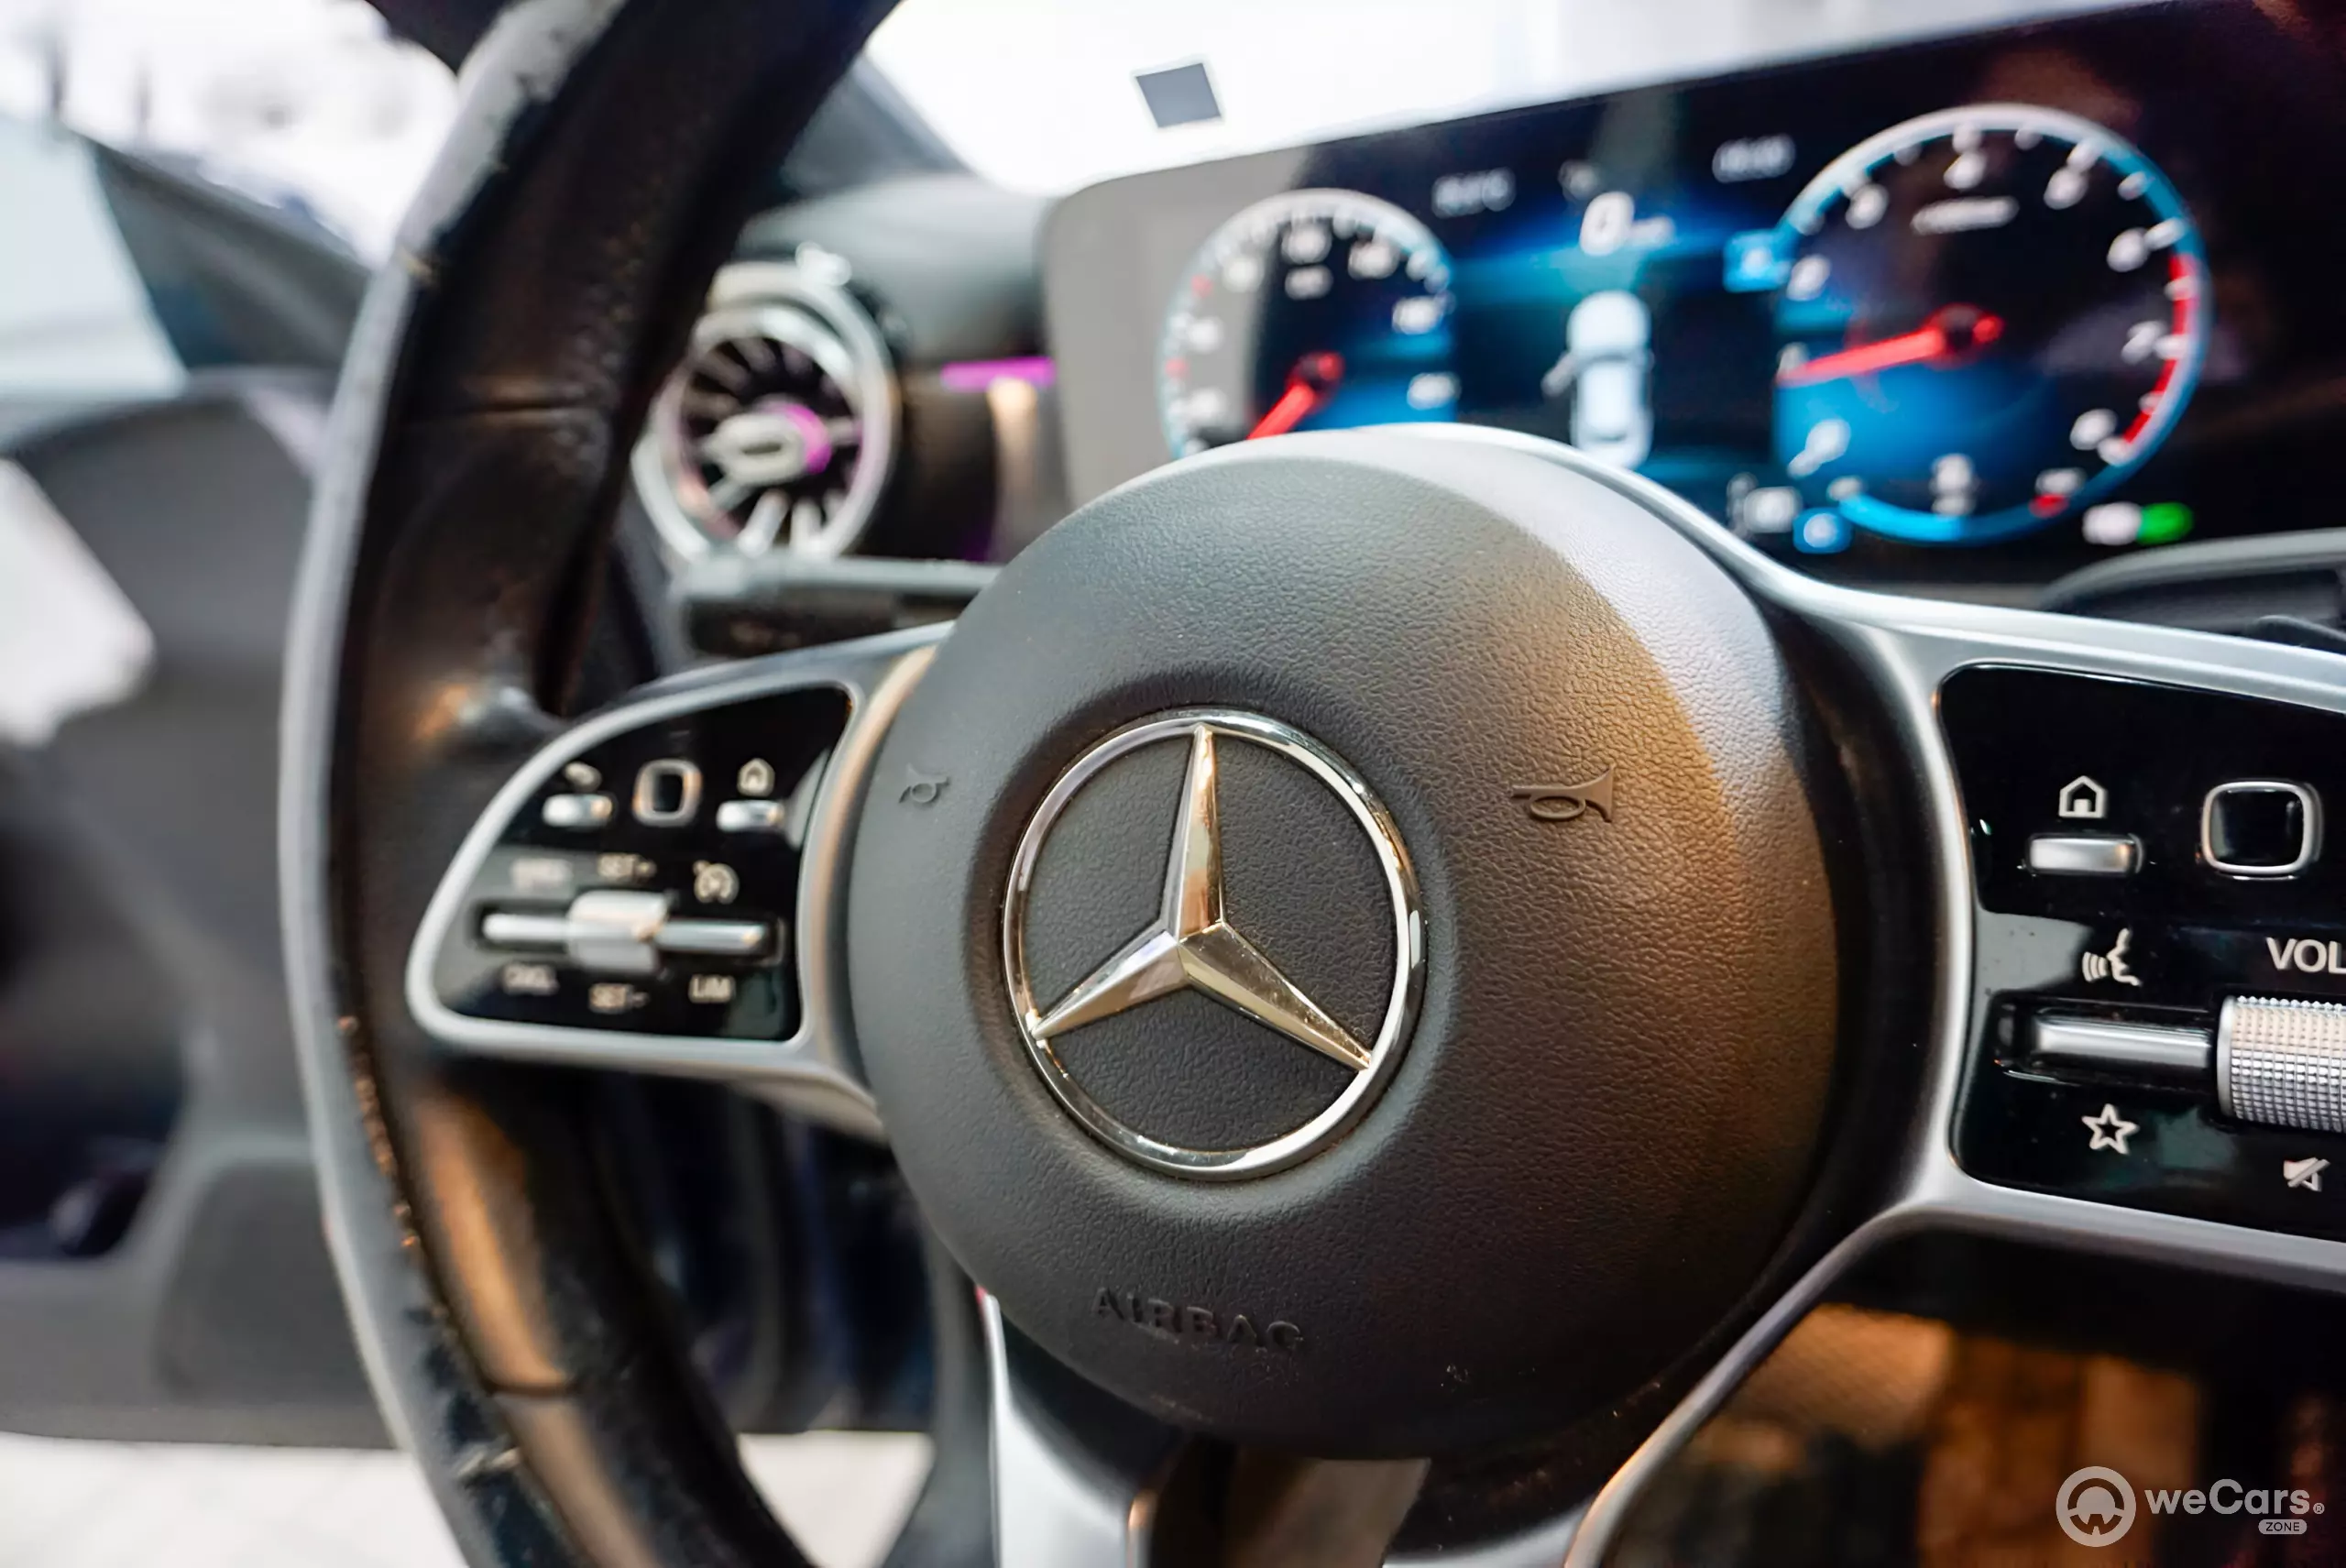 Mercedes Benz Clase CLA